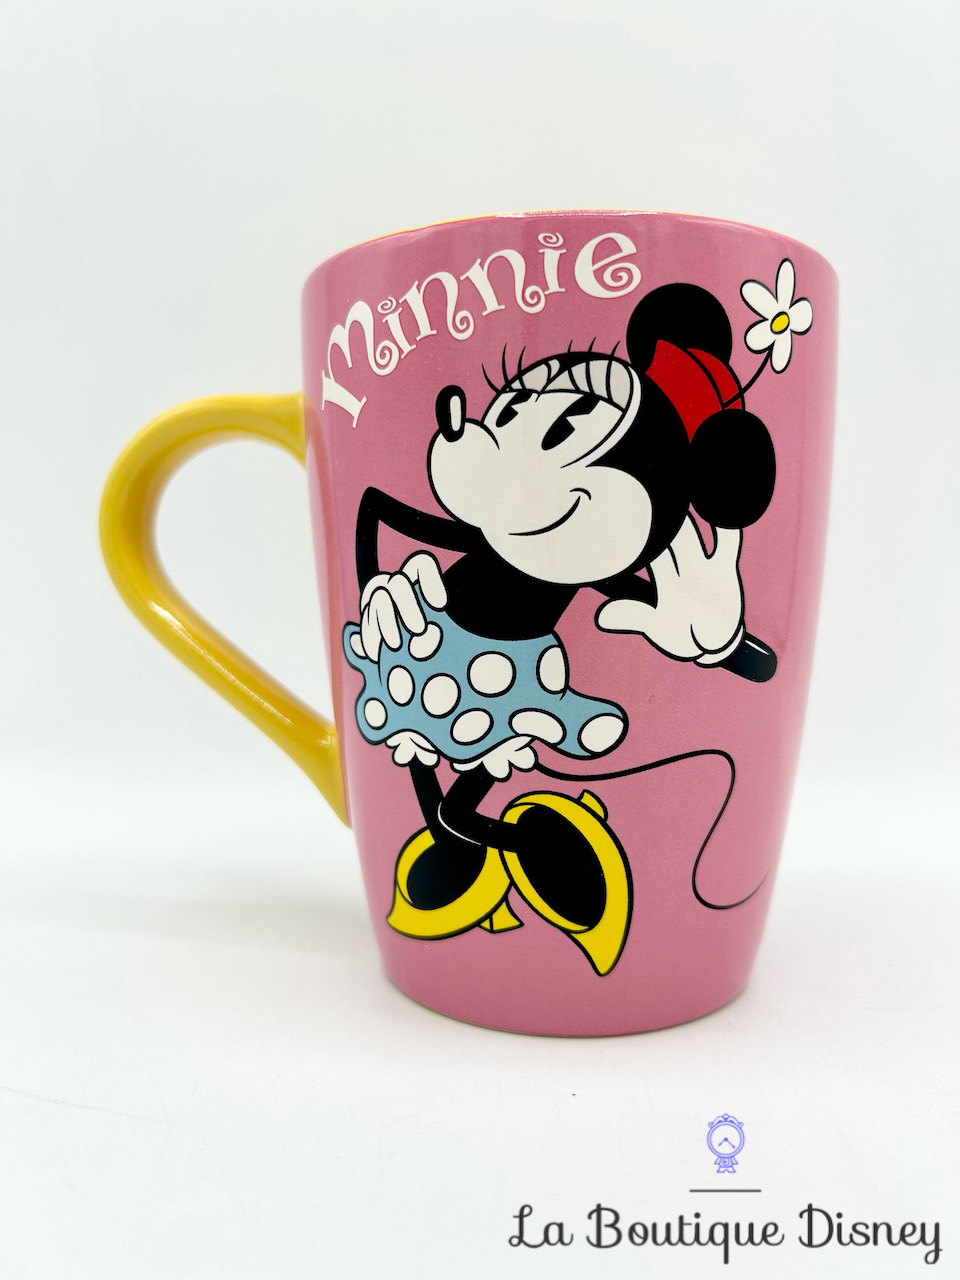 Tasse Minnie Mouse rétro vintage Disney Store 2016 mug rose jaune